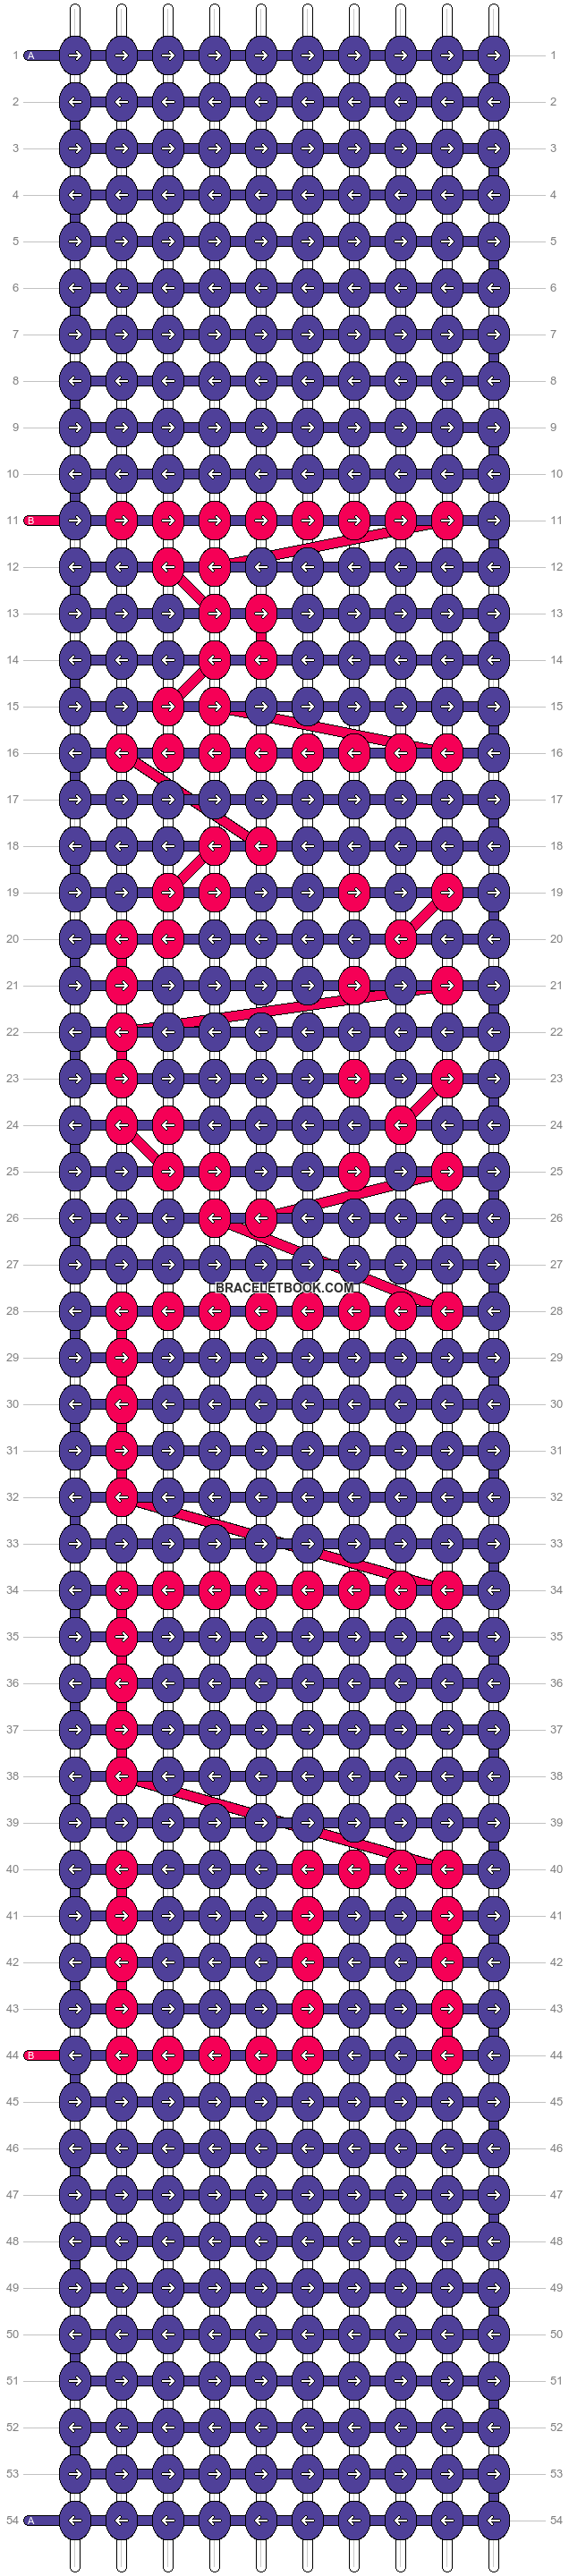 Alpha pattern #44165 variation #63338 pattern